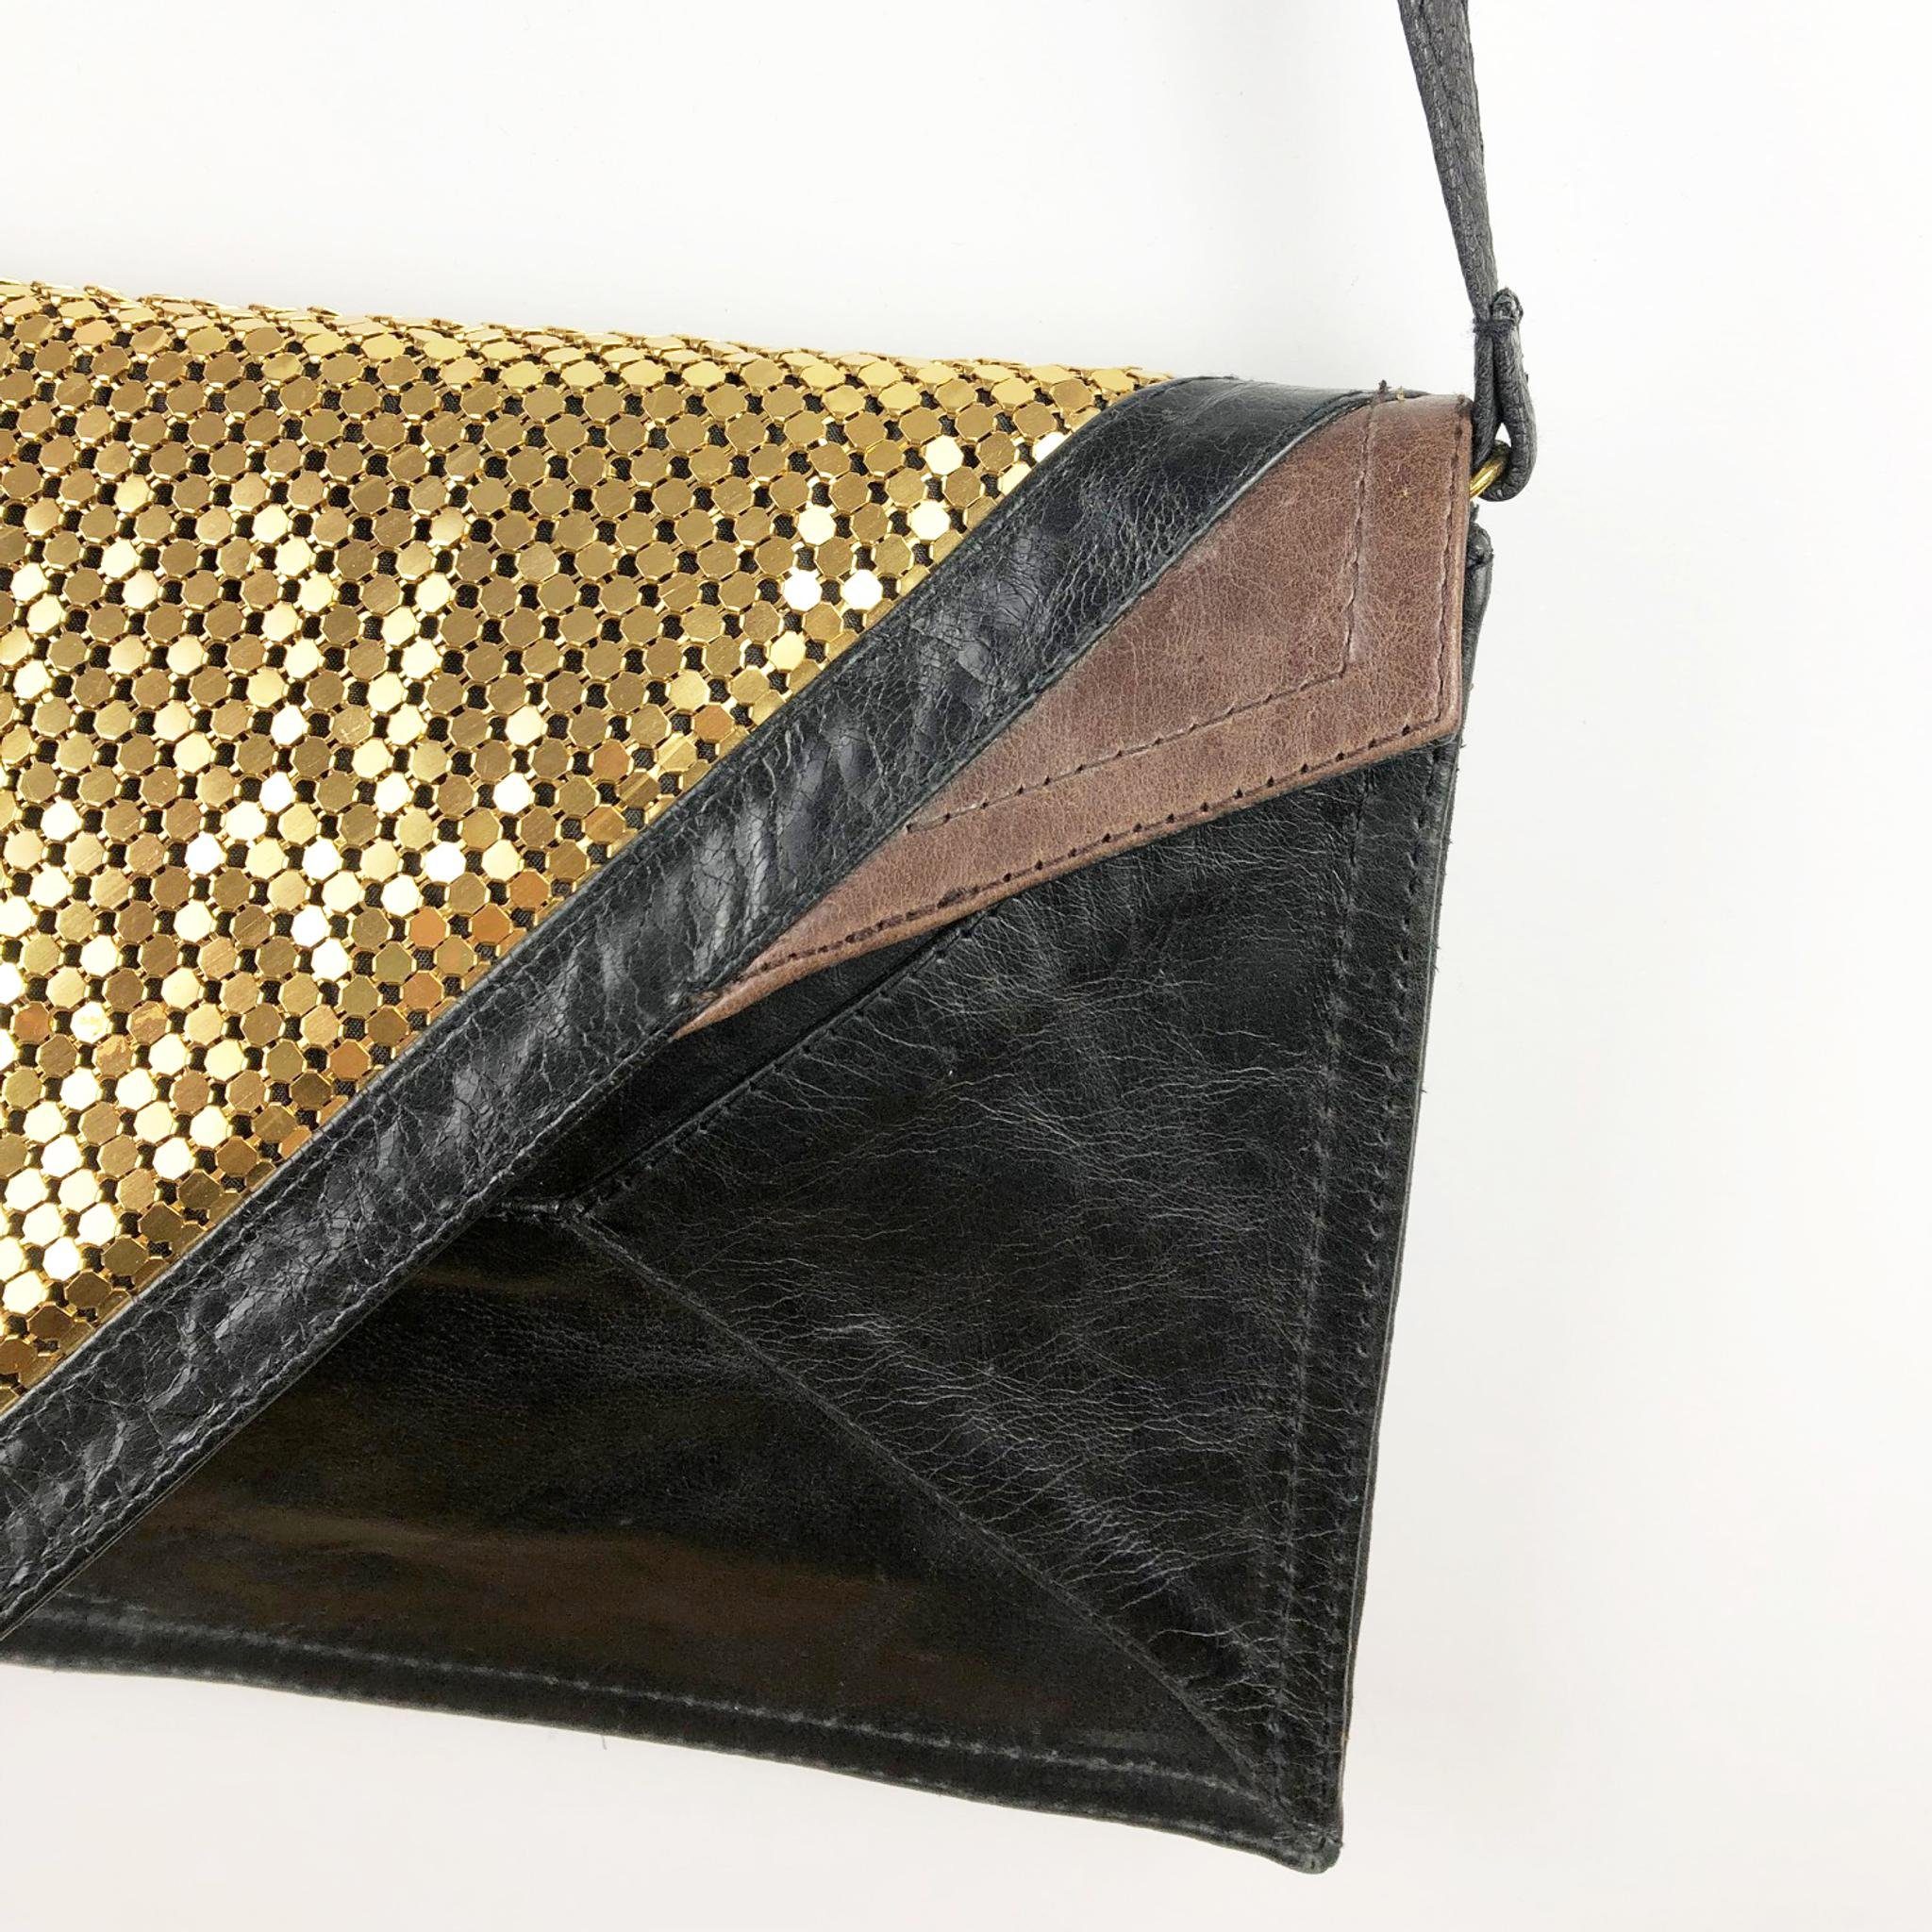 FLAT BAG GOLDEN Handtasche Tasche Vintage goldmarie pailletten braun gold, Leder